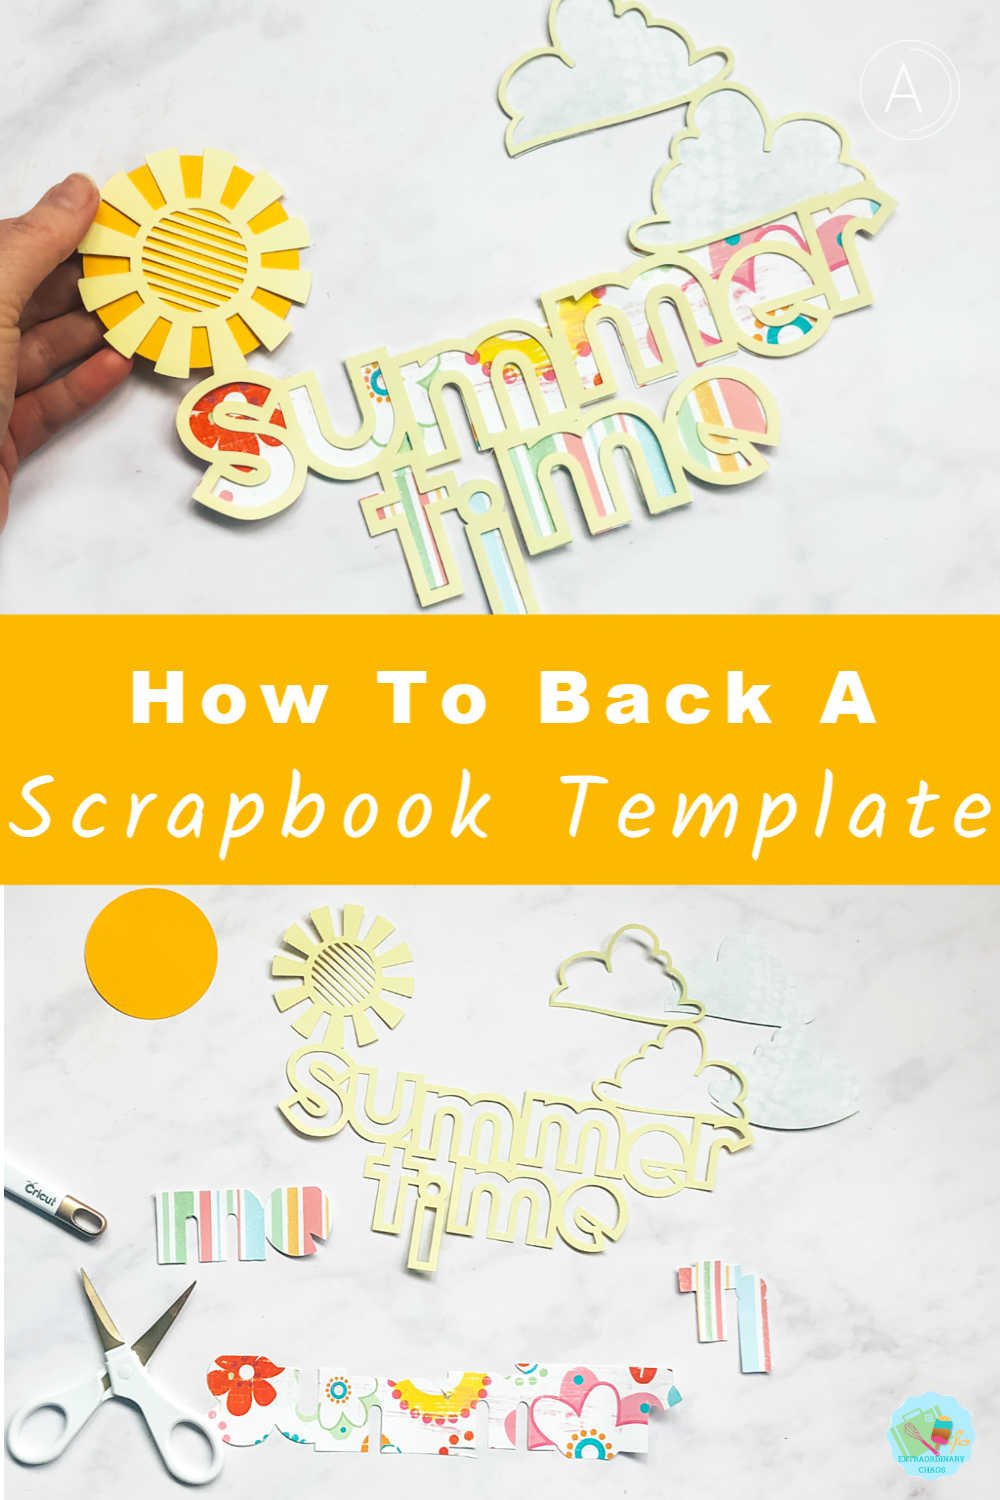 How to back a scrapbook template in Cricut Design Space